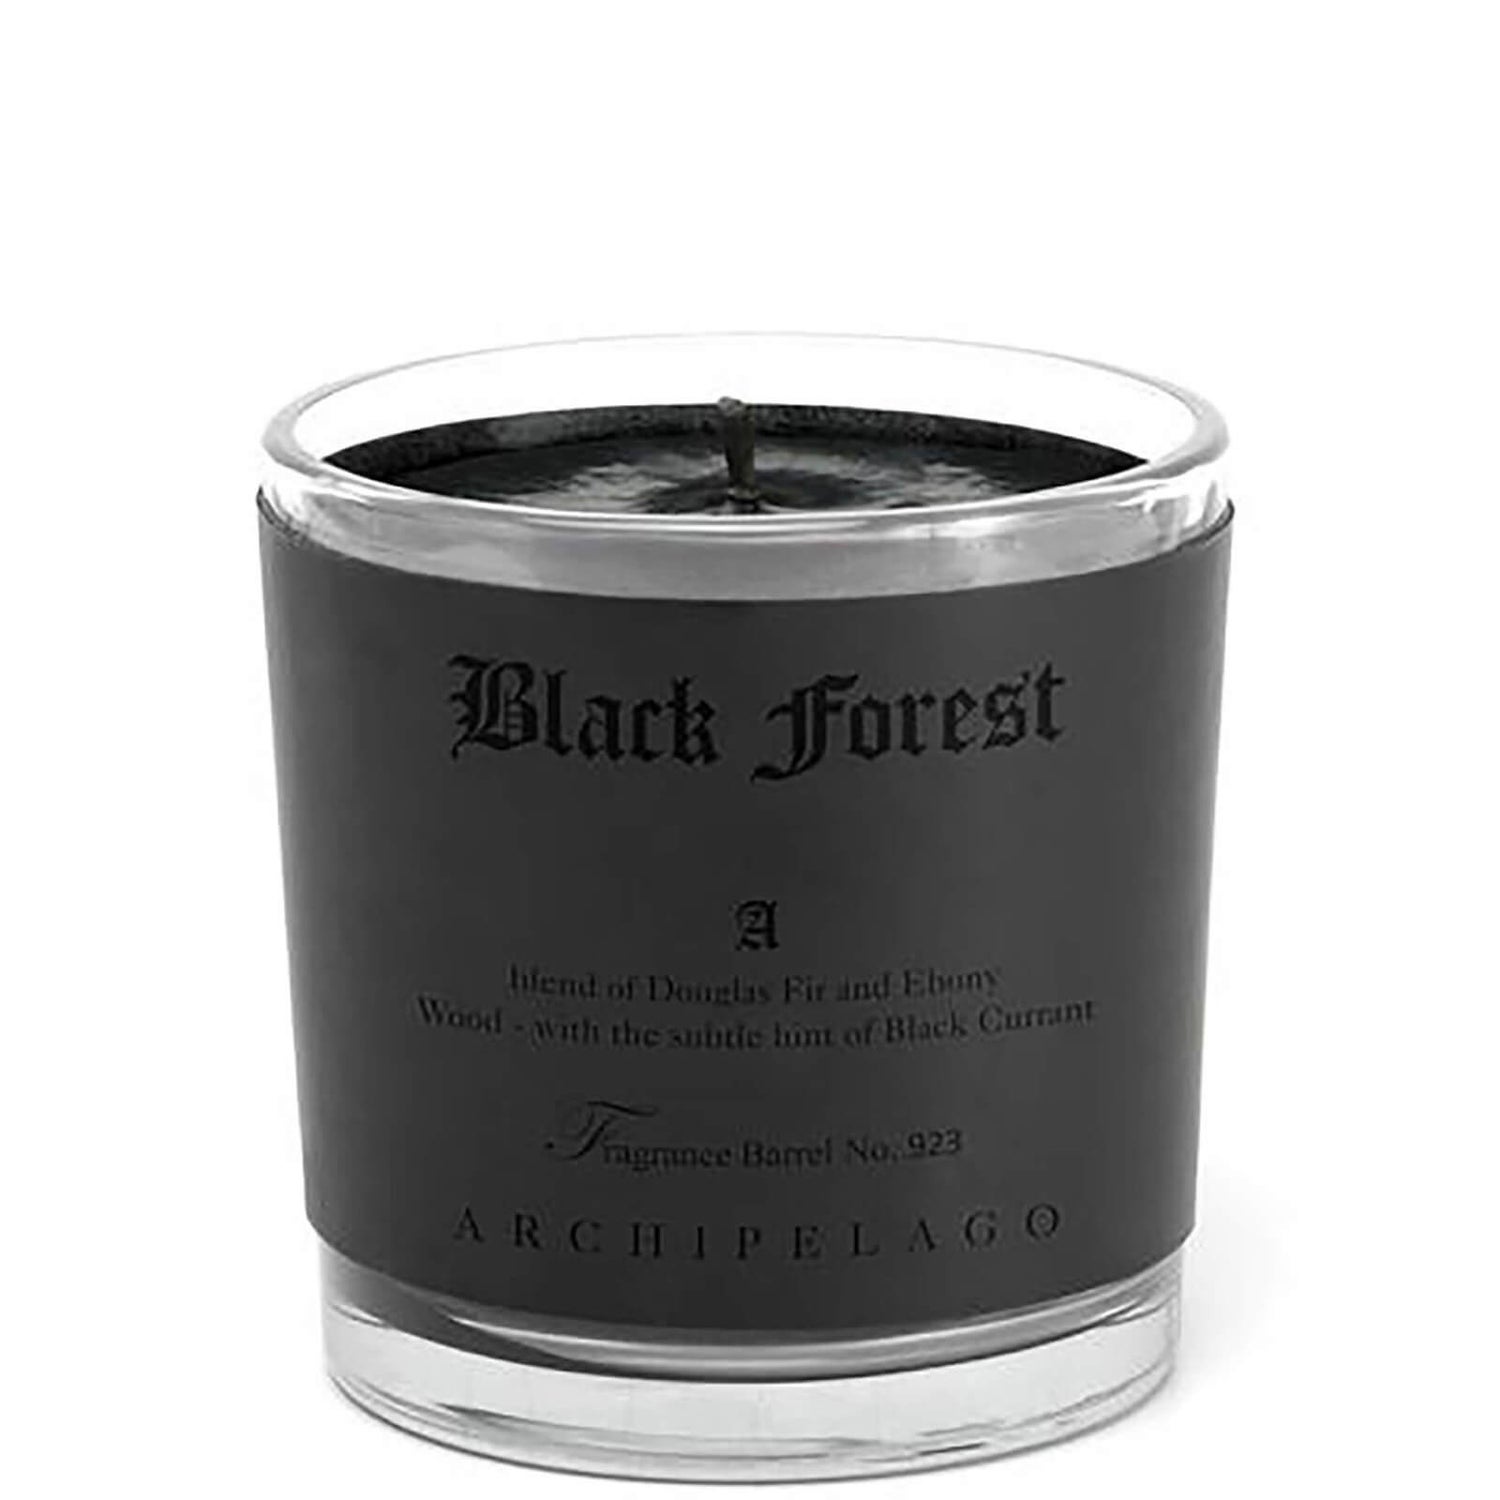 Archipelago Botanicals Letter Press Black Forest Candle 363g Exclusive